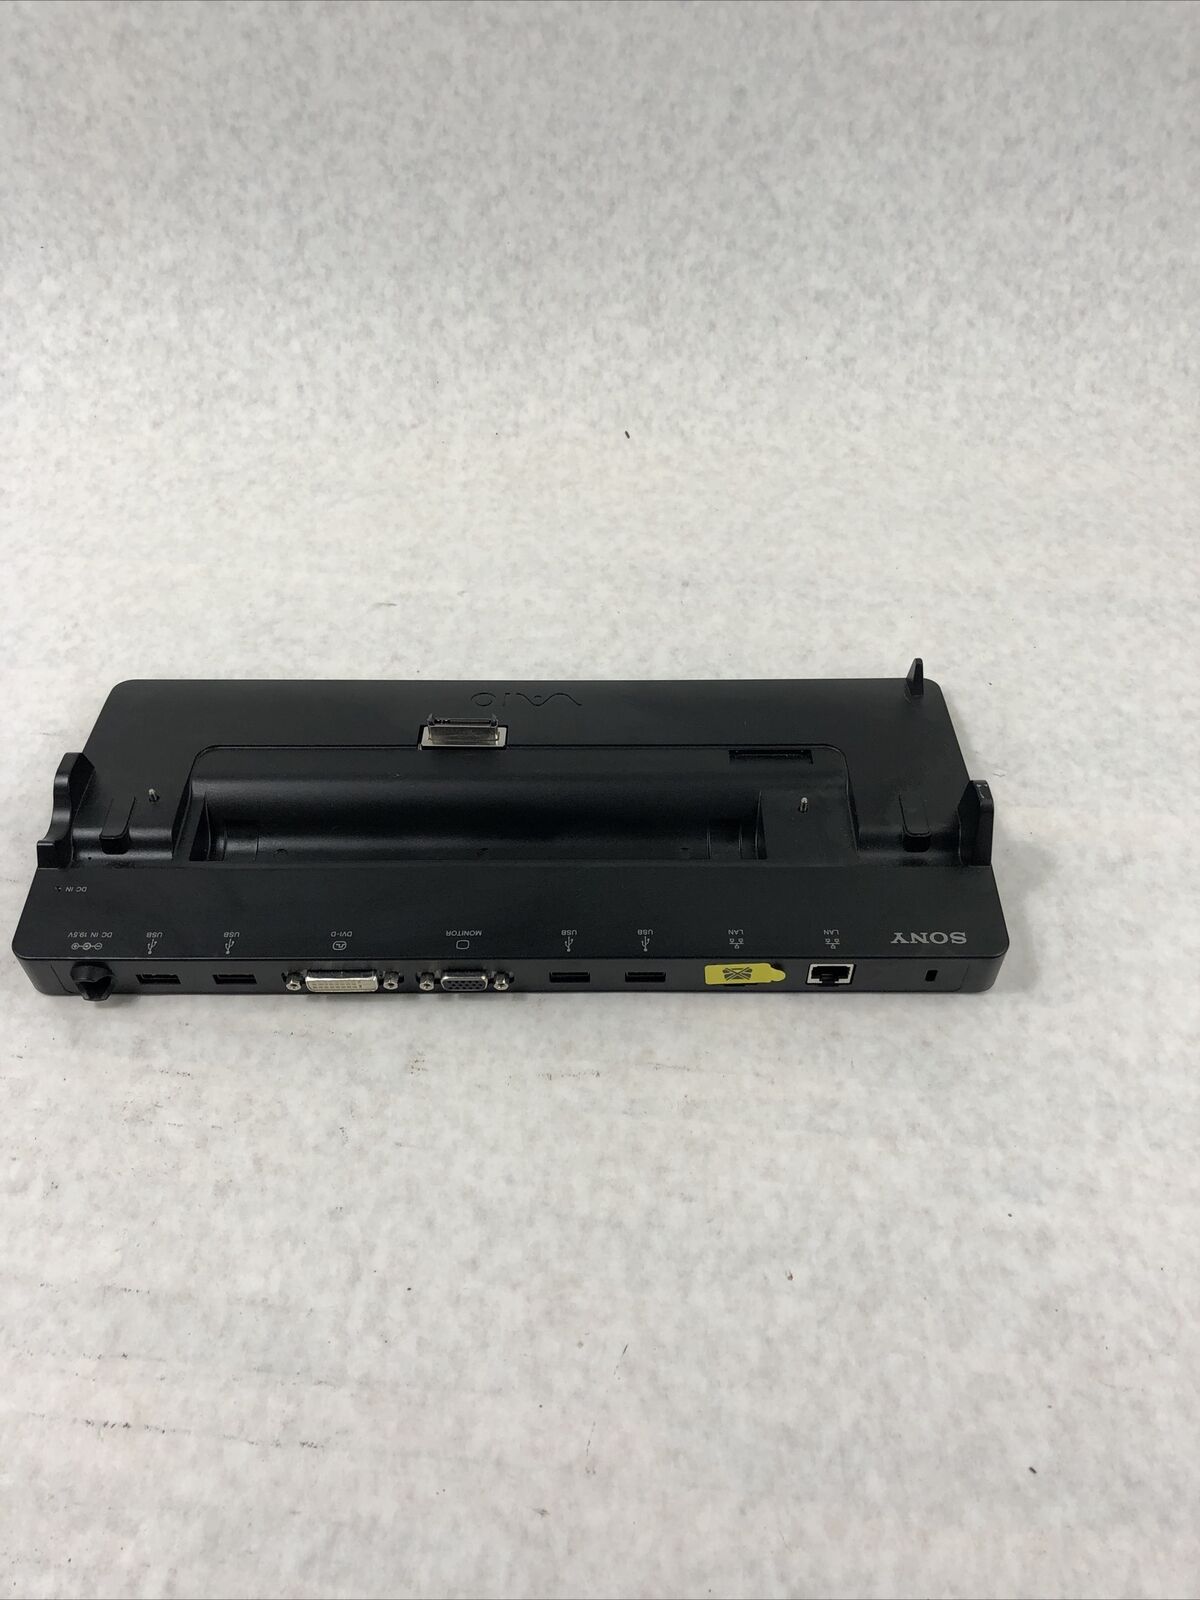 Sony VGP-PRZ10 Laptop USB Port Replicator Docking Station - Black